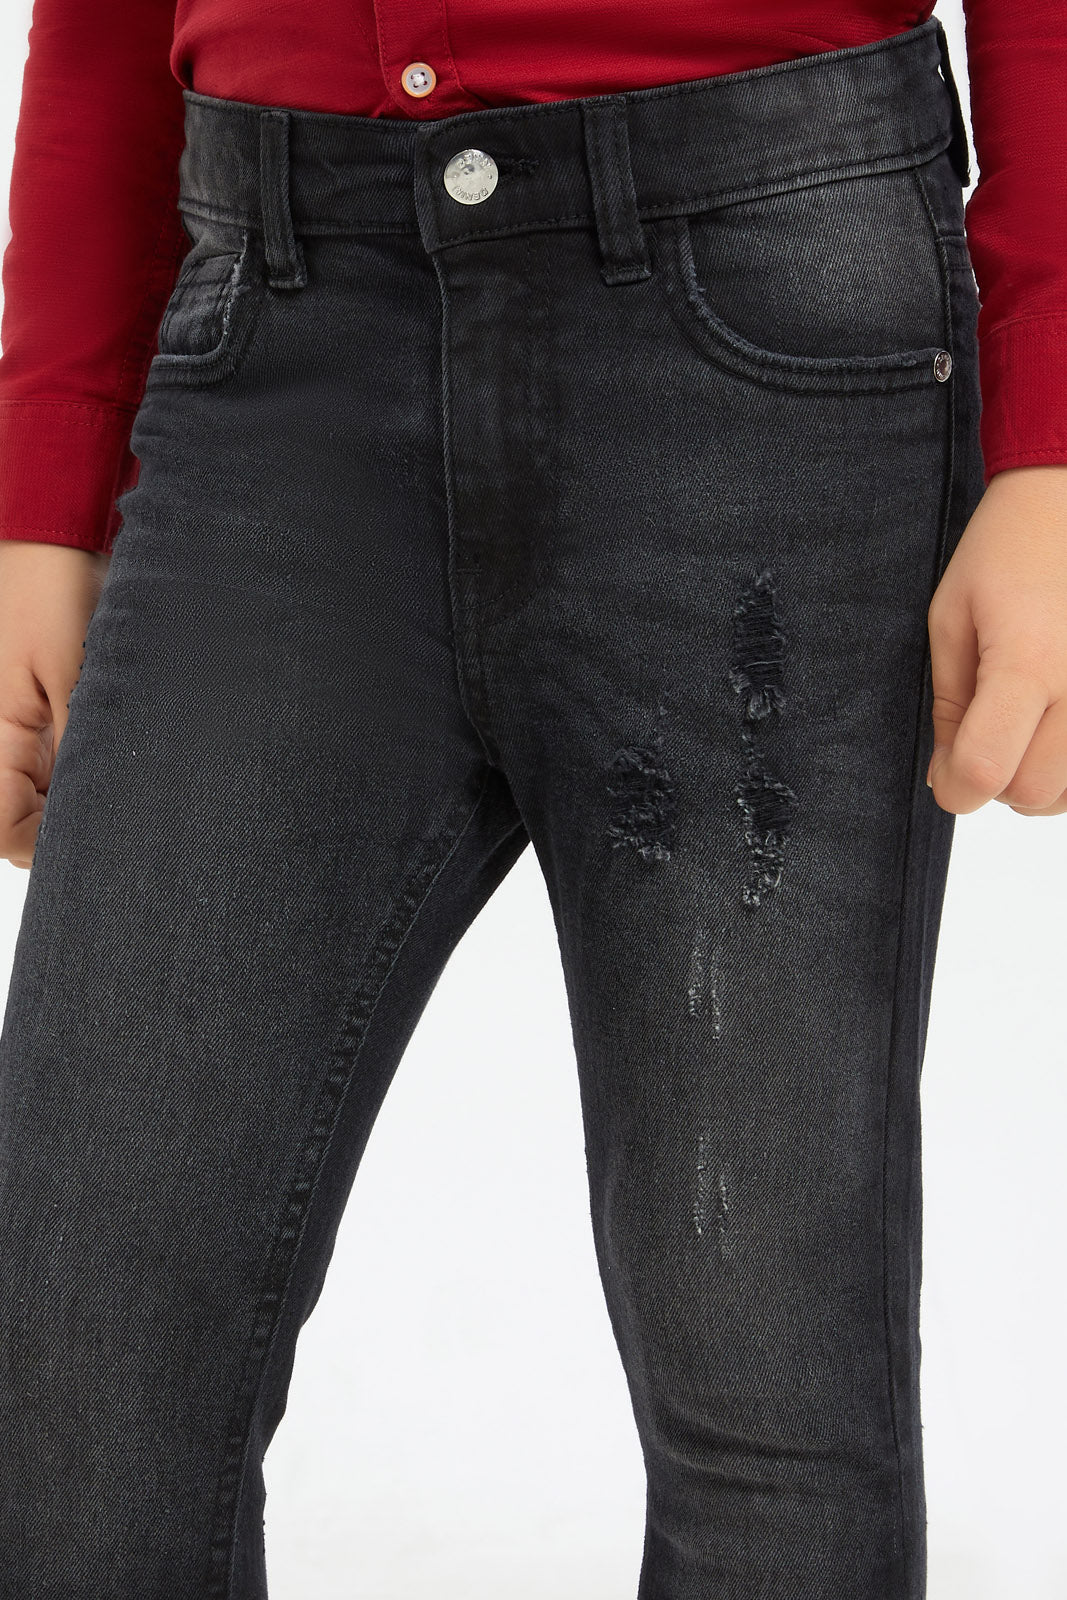 Sexy Ripped Jeans Beggar Women Big Holes Destroyed Broken Torn Pants  Vintage Female Denim Trousers Distressed Designer Boyfriend - Pants &  Capris - AliExpress